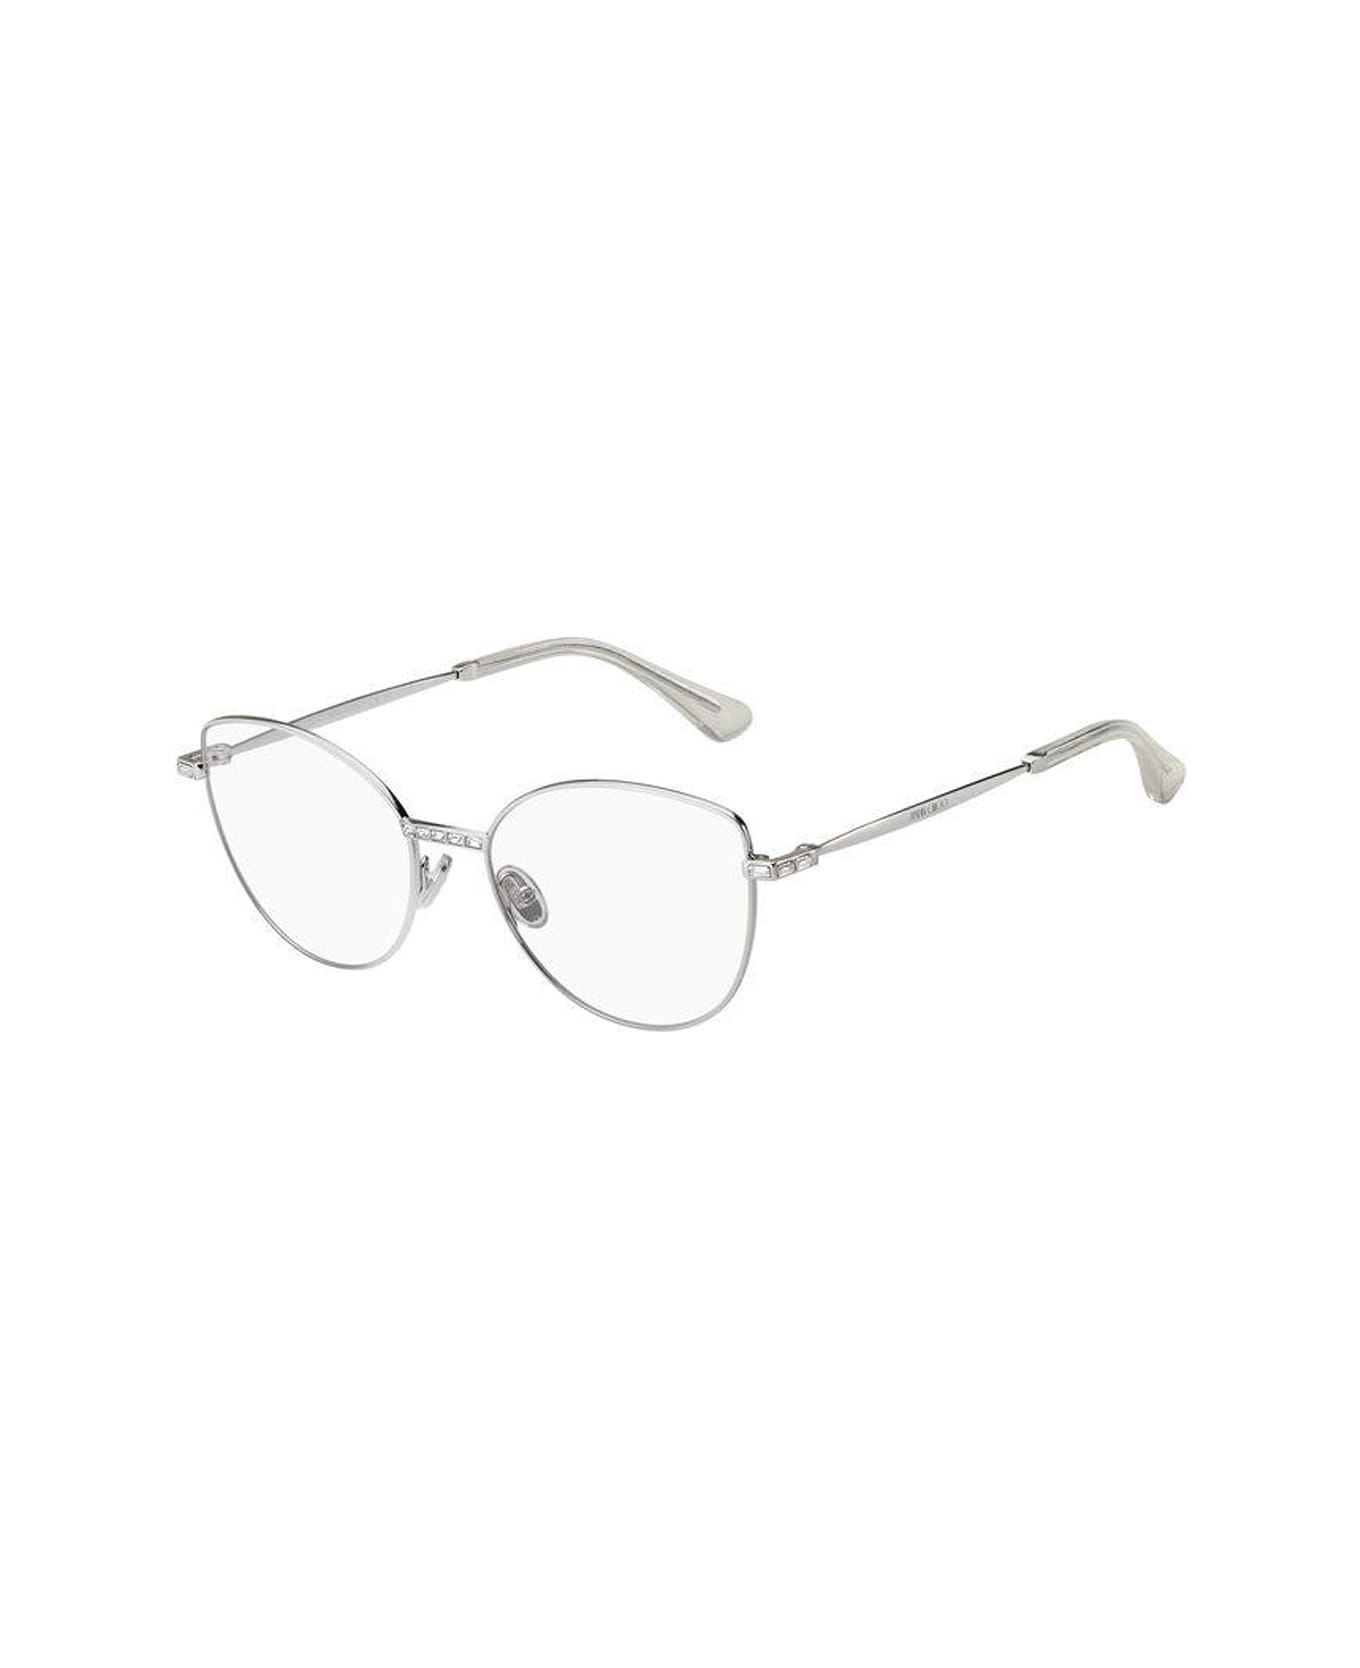 Jimmy Choo Eyewear Jc285 010/17 Glasses - Argento